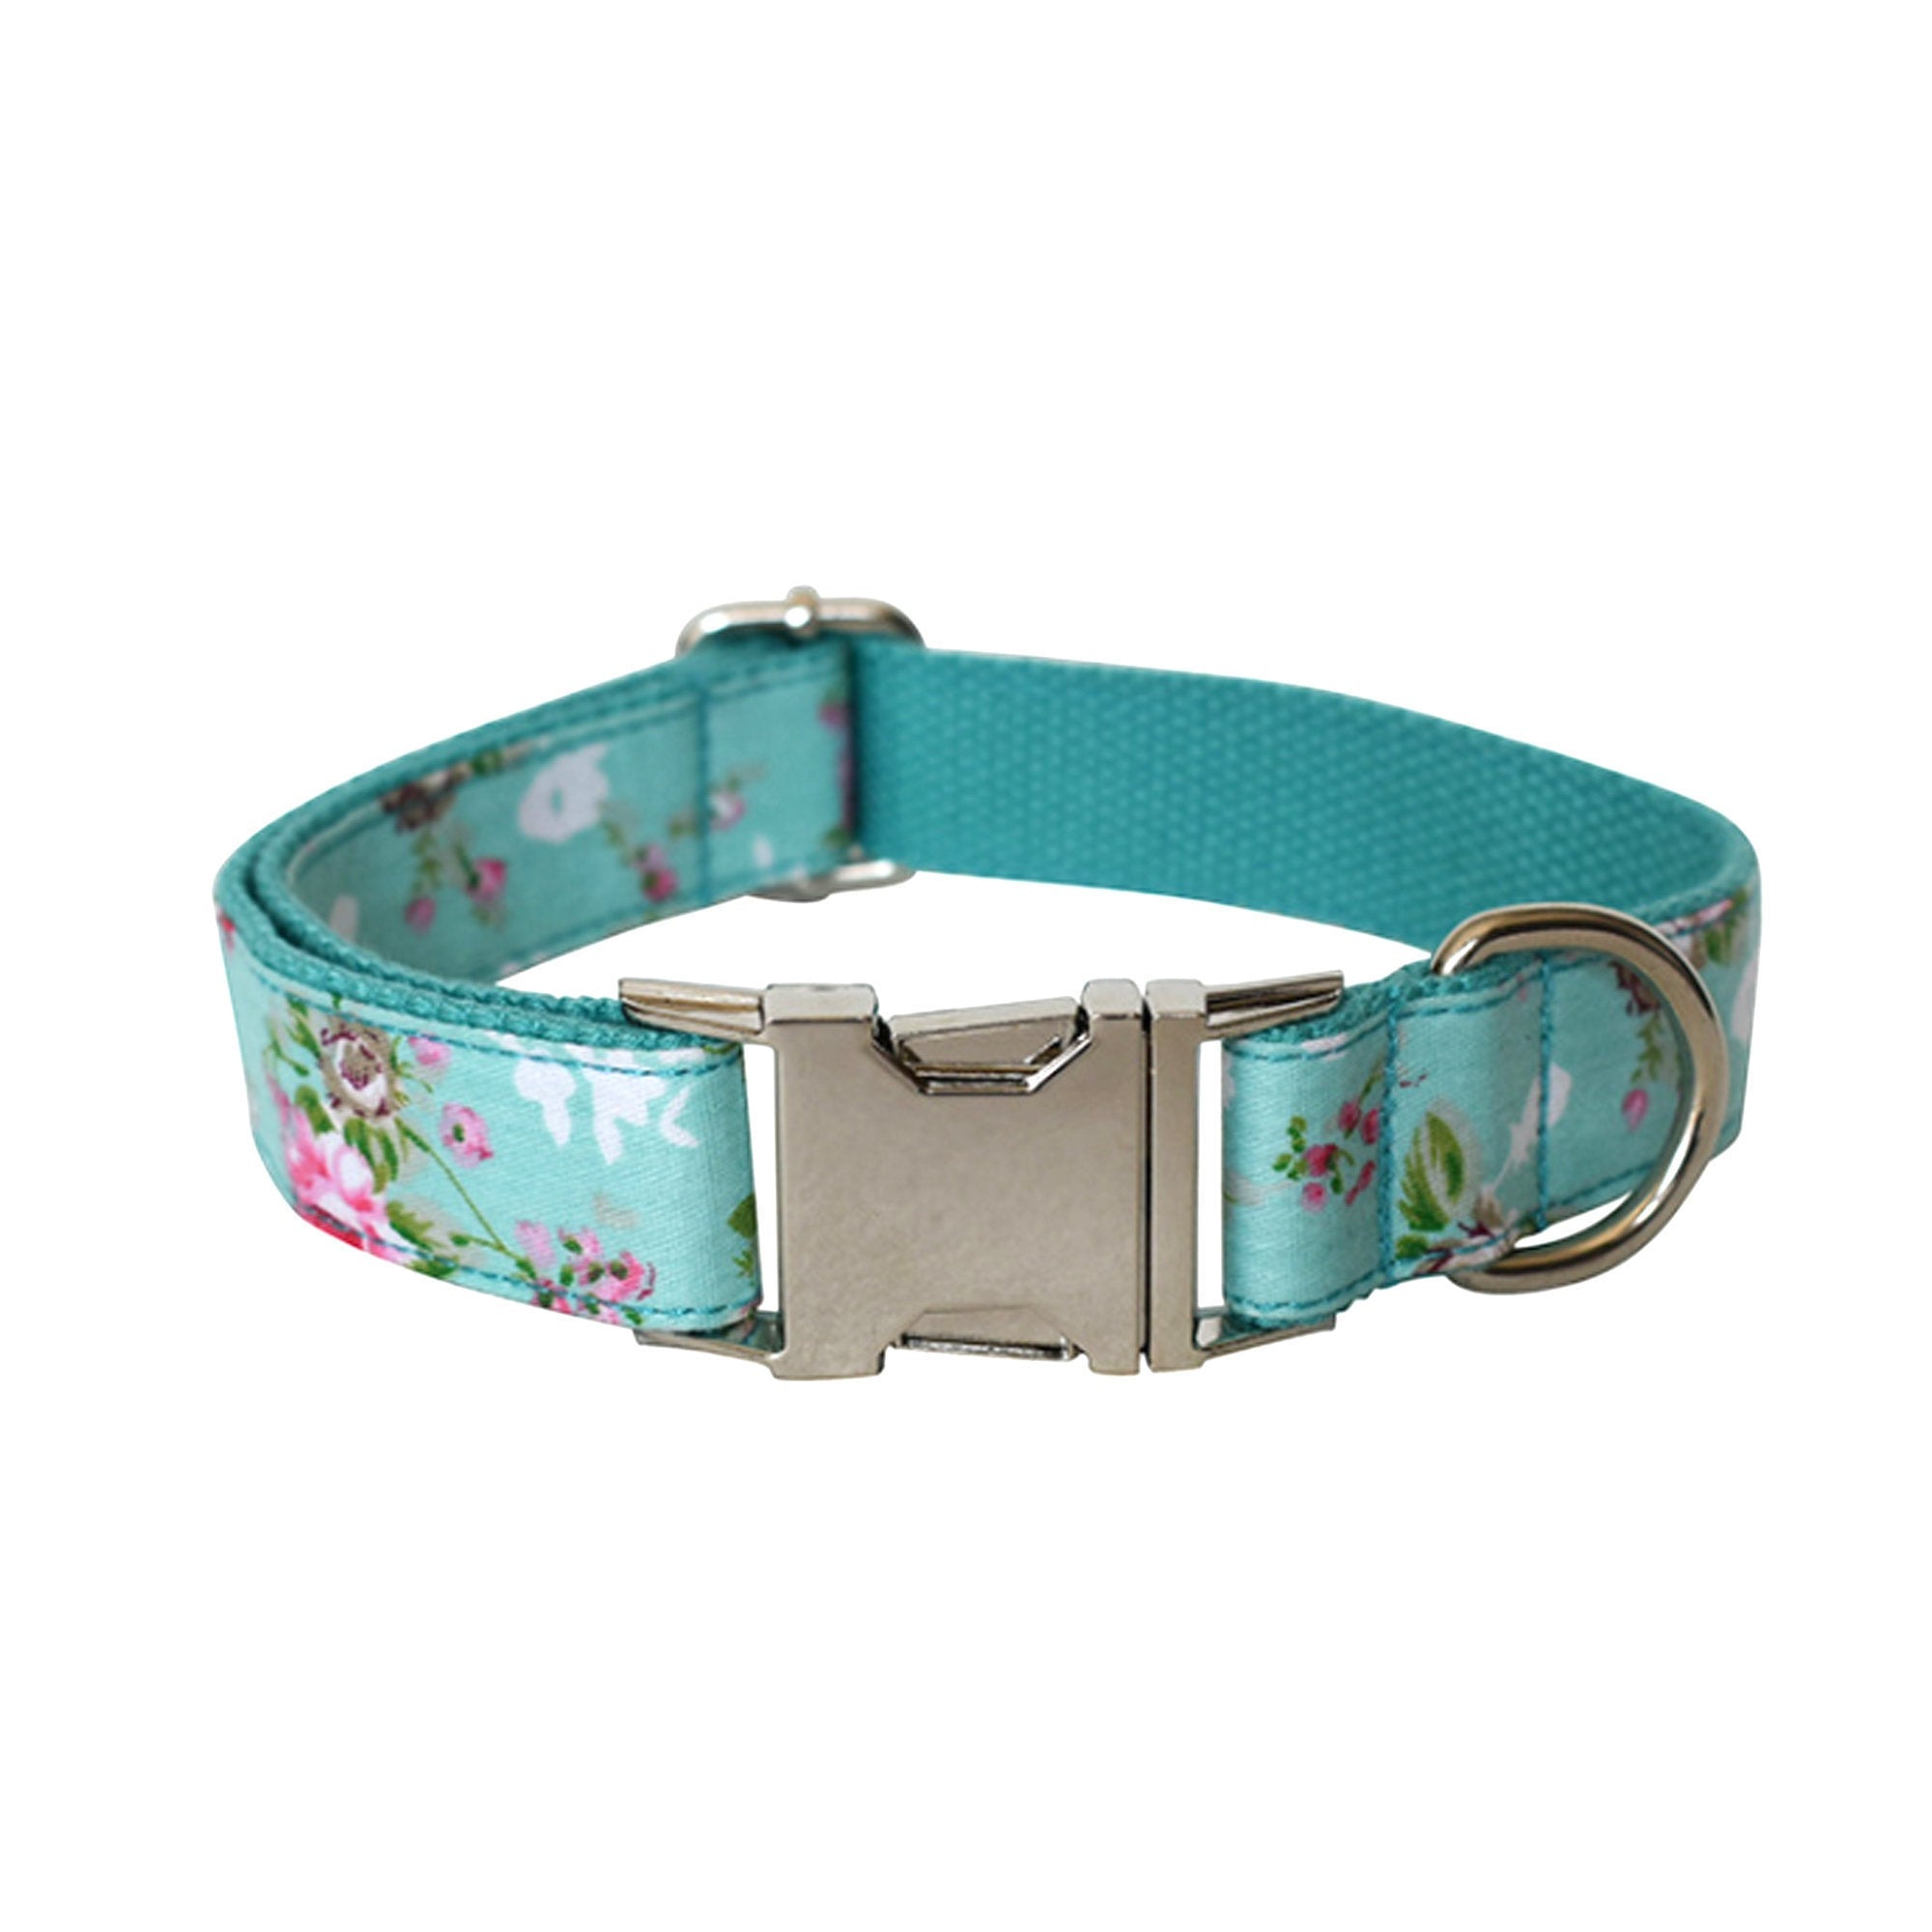 Engraved Pet ID Floral Pattern Dog Collar Set